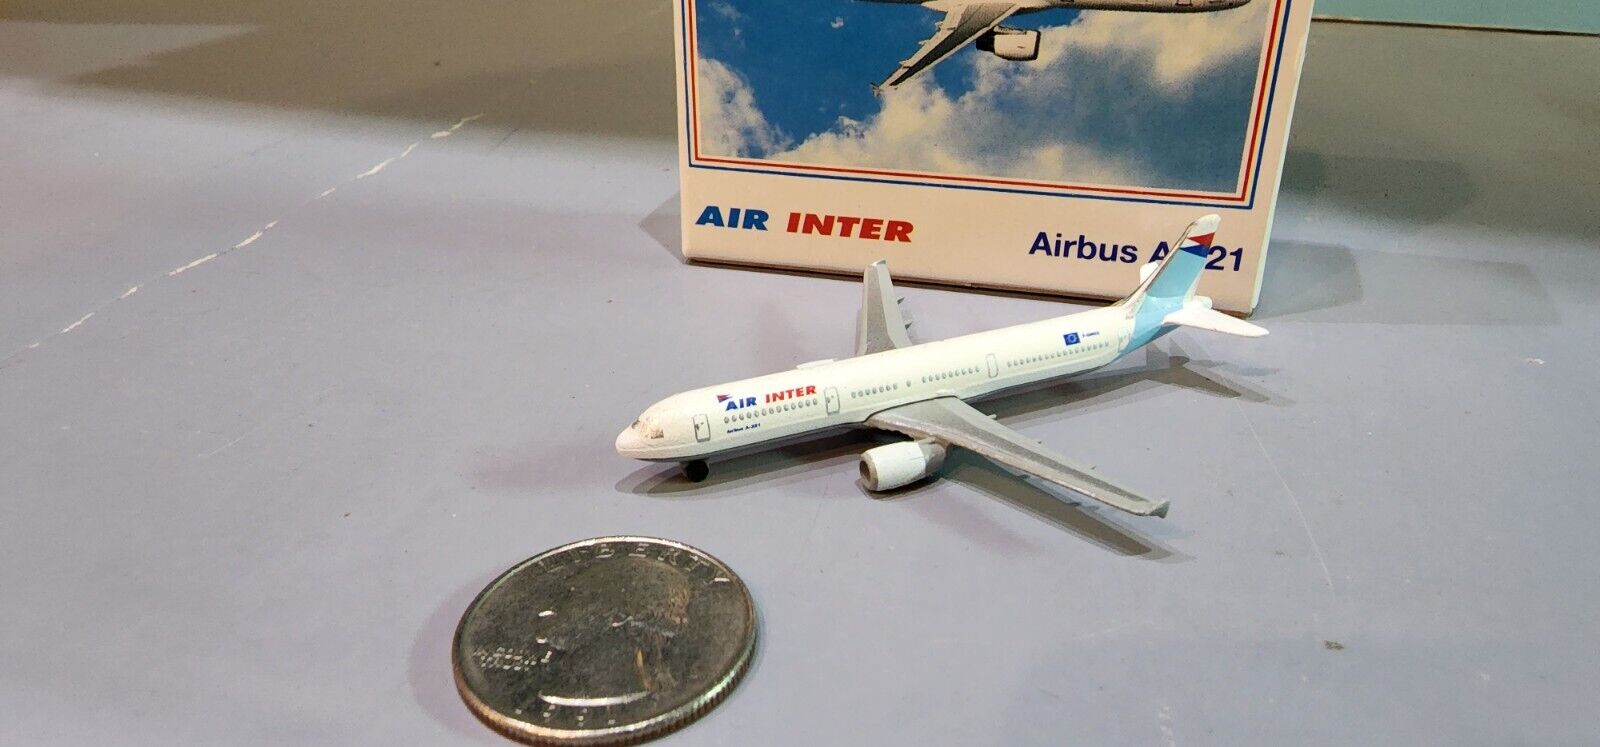 SCHABAK AIR INTER A321 1:600 SCALE DIECAST METAL MODEL